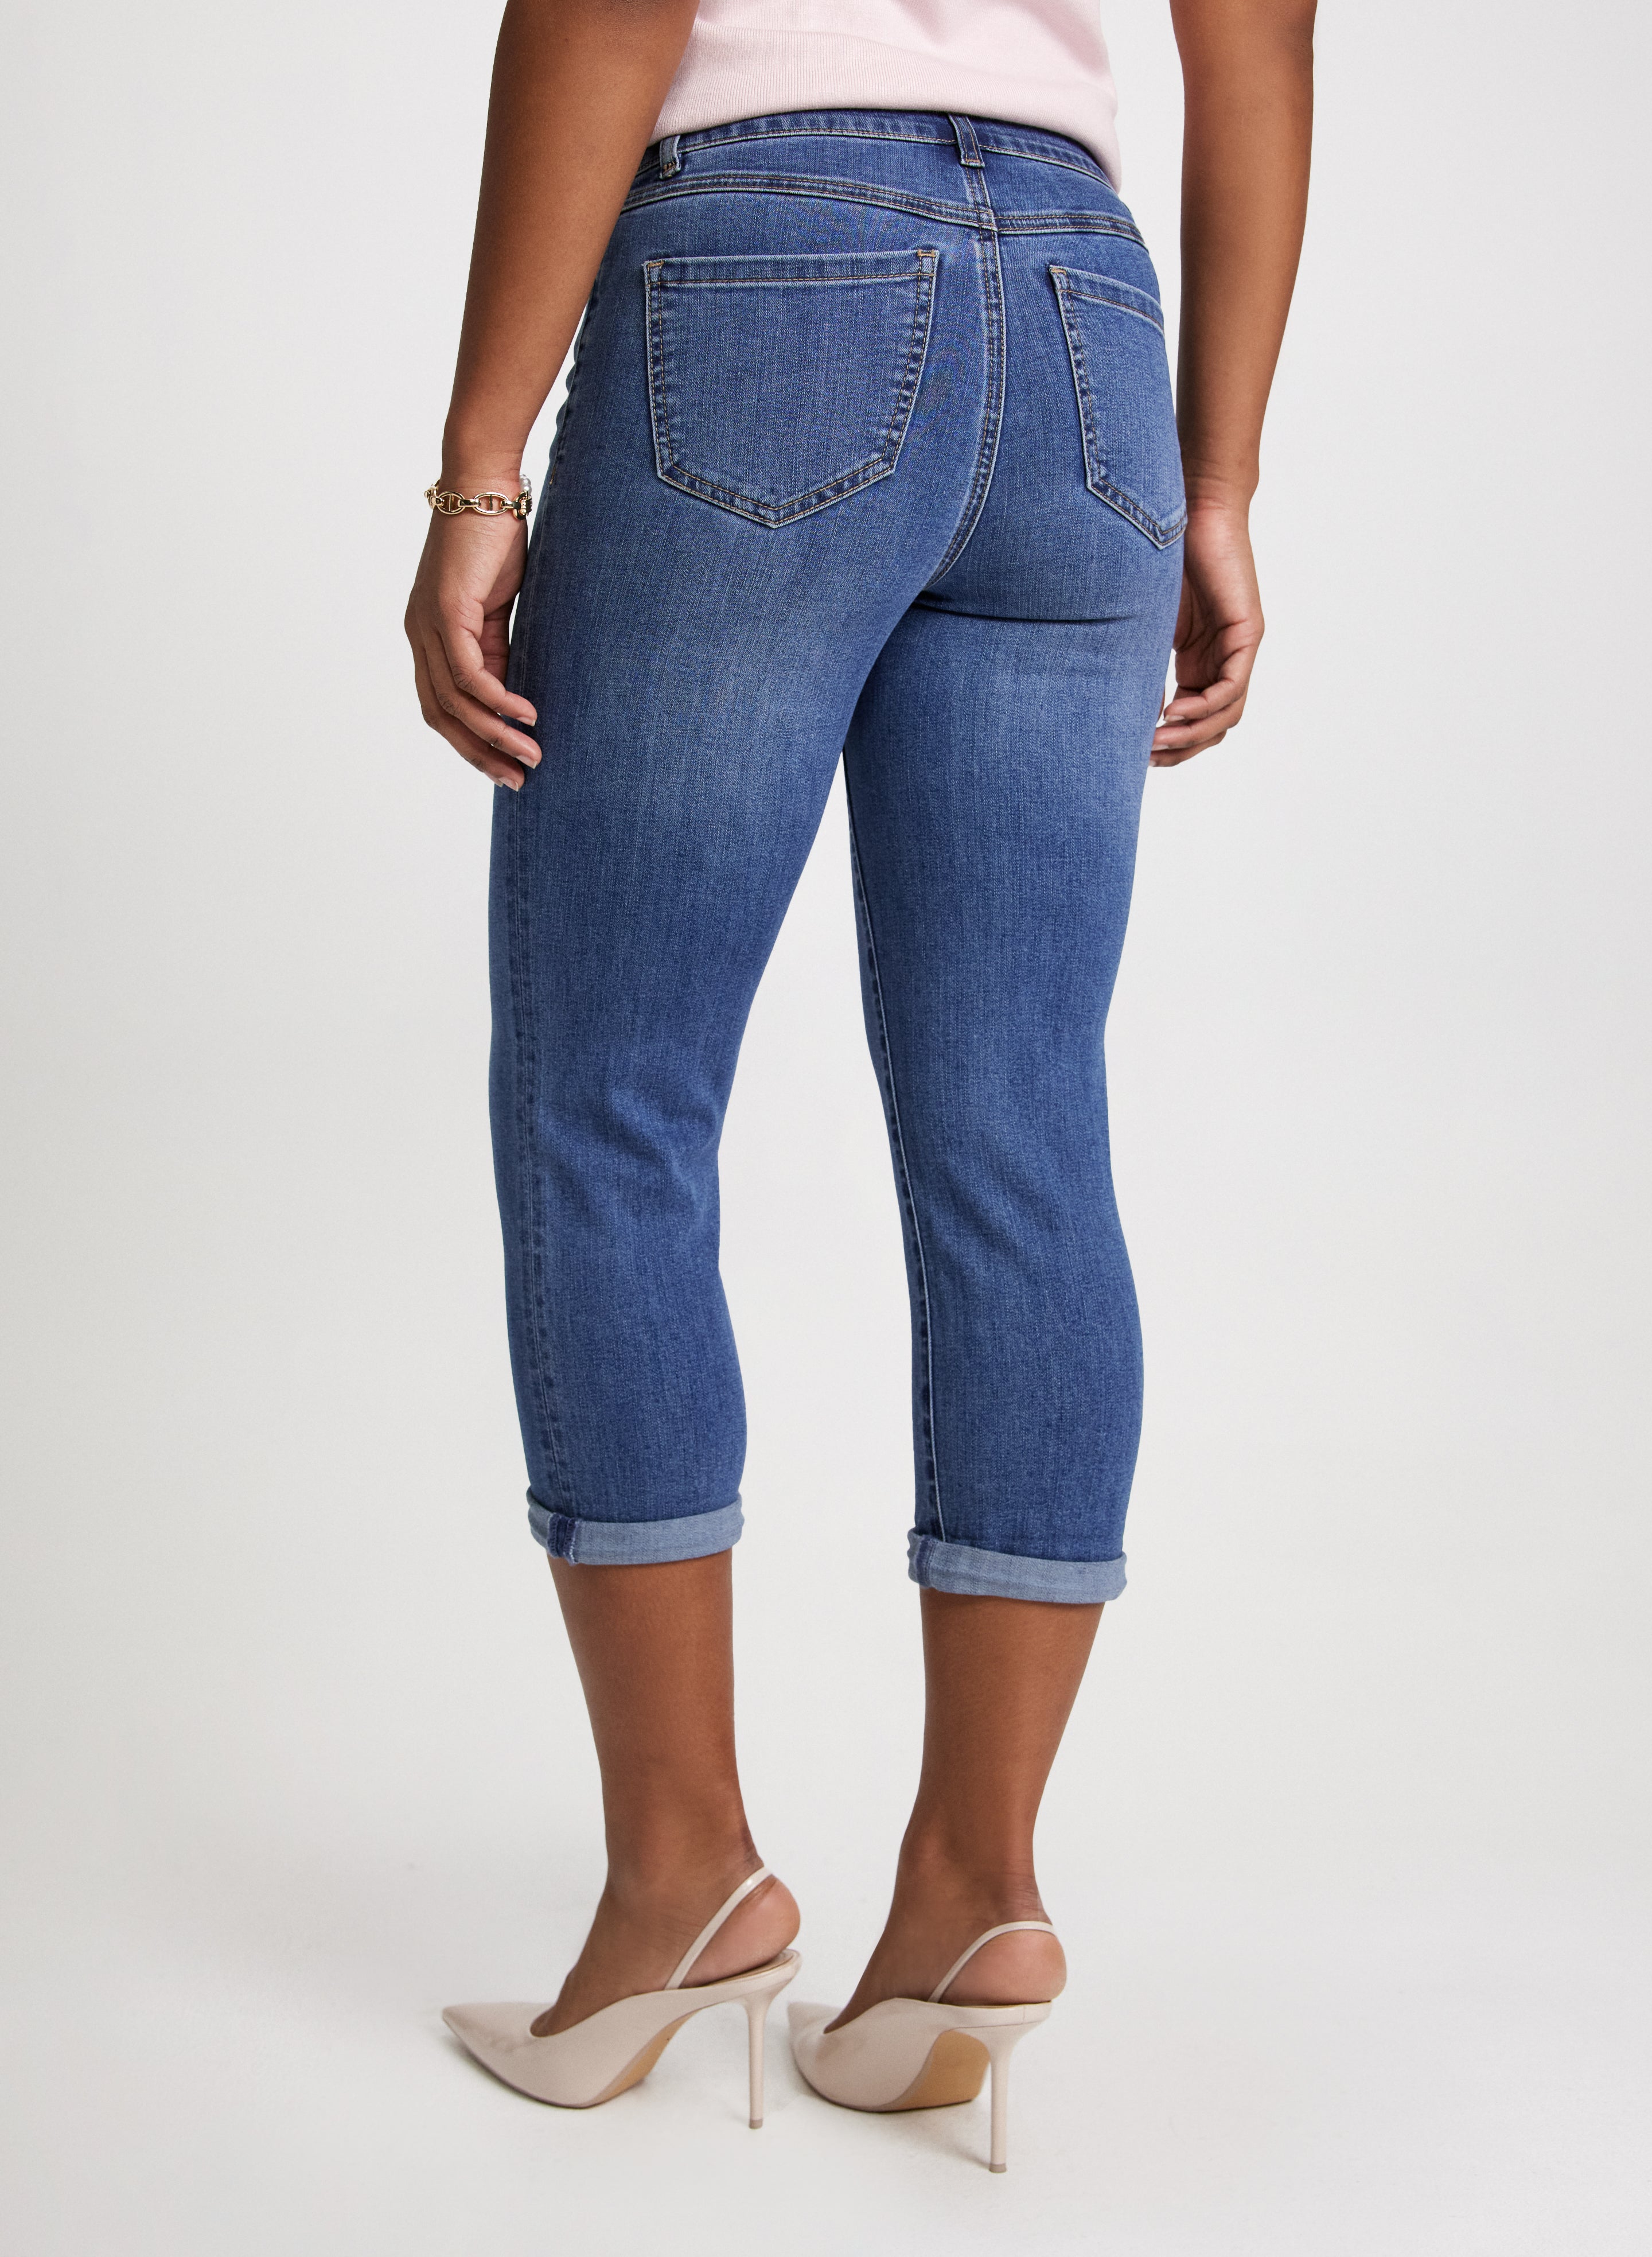  Womens Capri Jeans Stretchy Straight Leg Denim Pants Sky  Blue Size 10